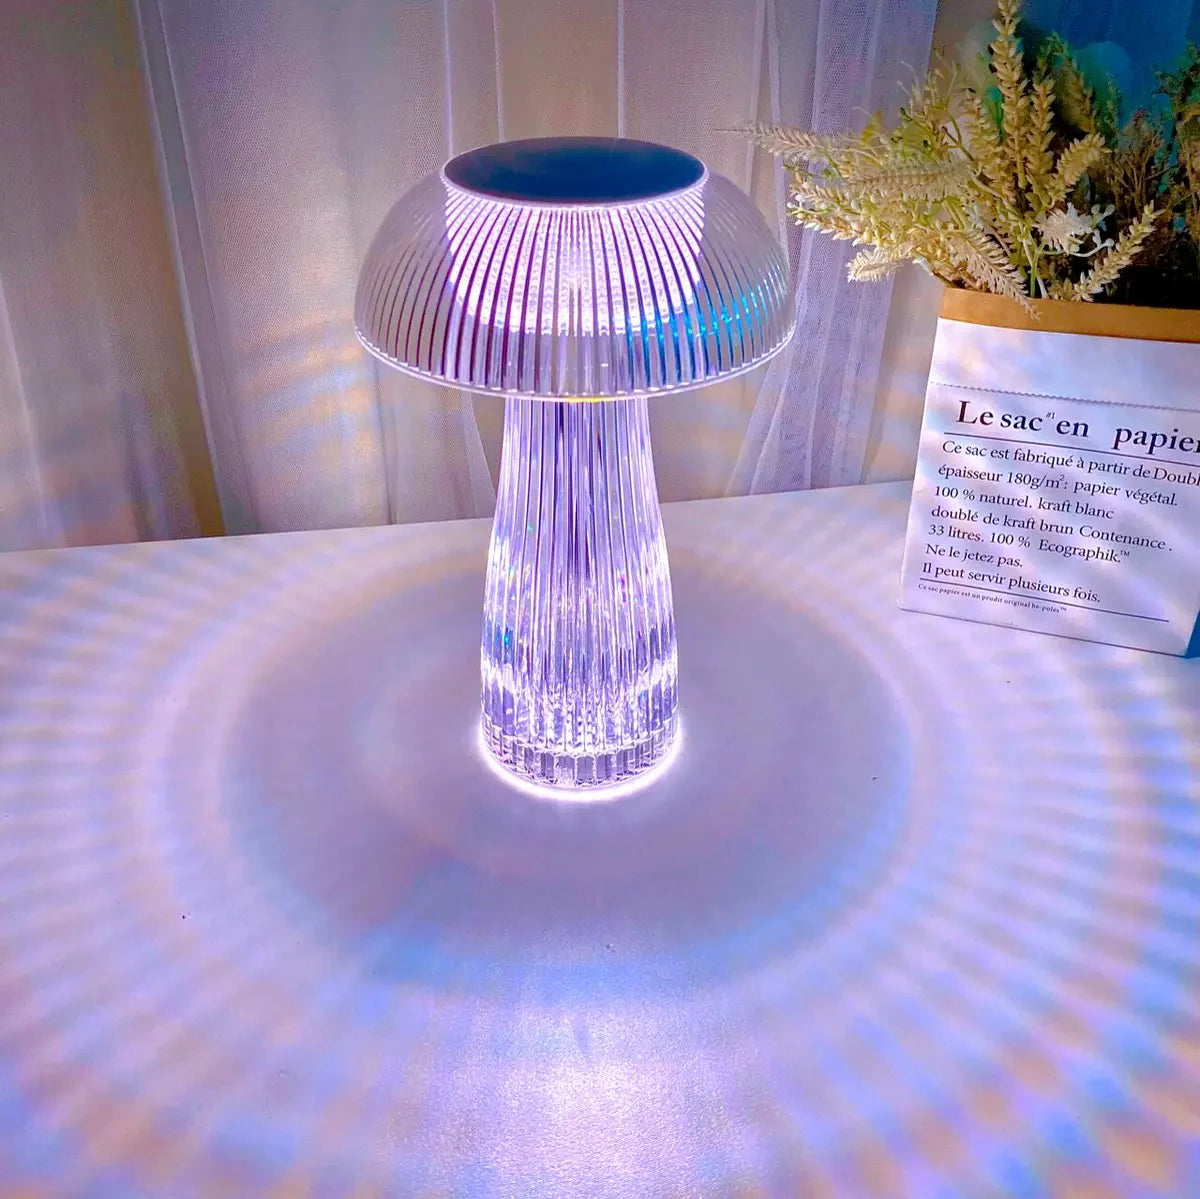 Radiate Elegance and Whimsy: Transparent Mushroom Nightlight - Versatile Bedroom, Jellyfish Lamp, Crystal Table Light Perfect for Parties, Mood Lighting, and Ramadan Decorations